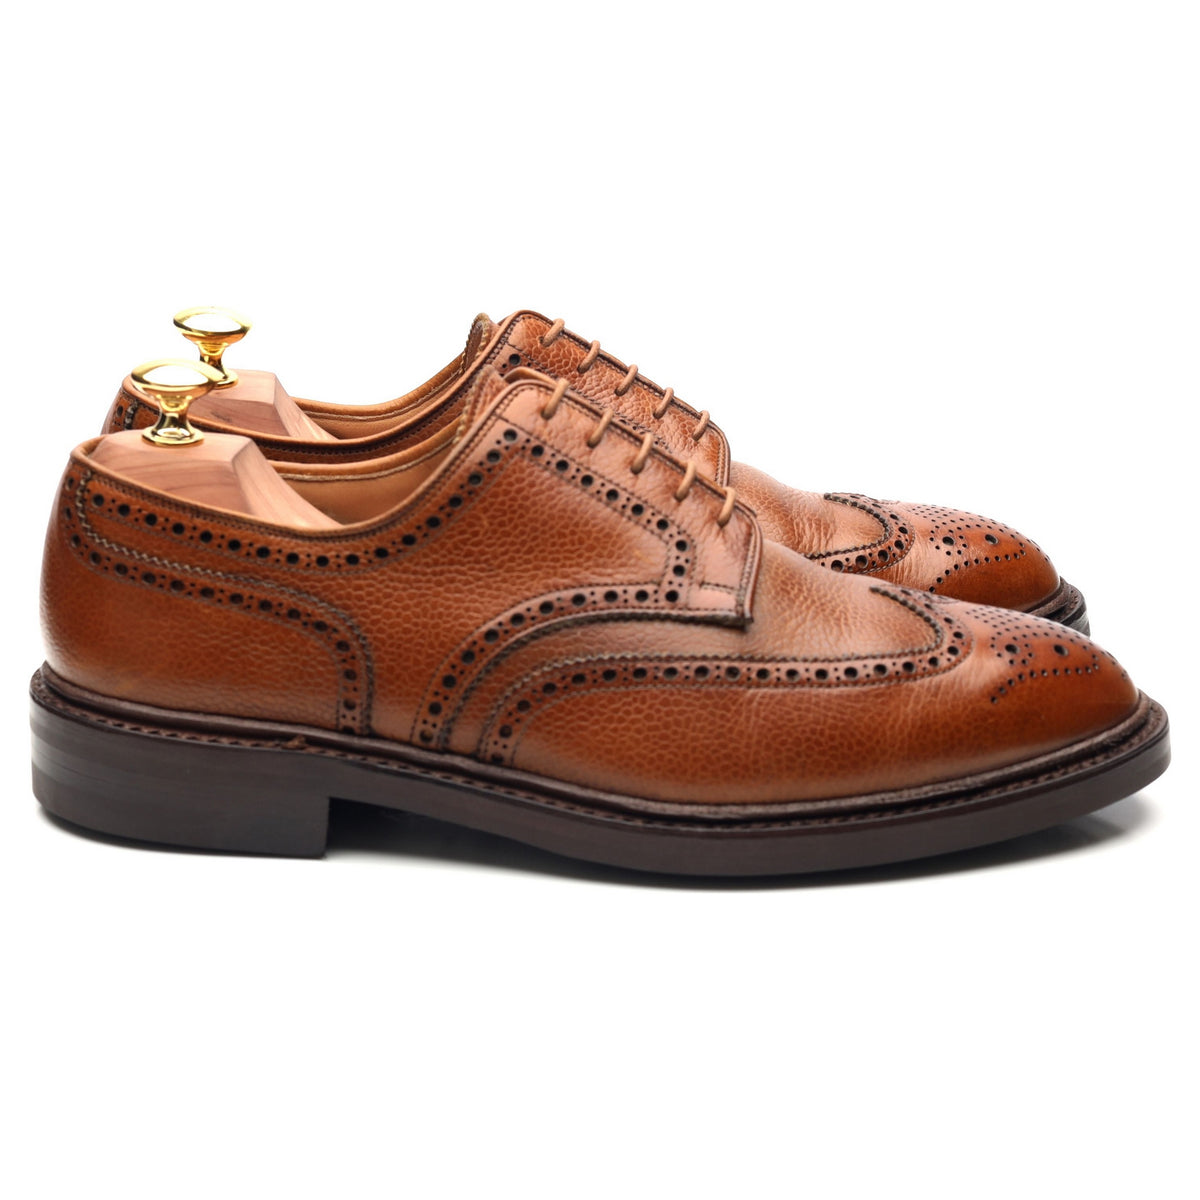 Pembroke' Tan Brown Leather Derby Brogues UK 8 E - Abbot's Shoes